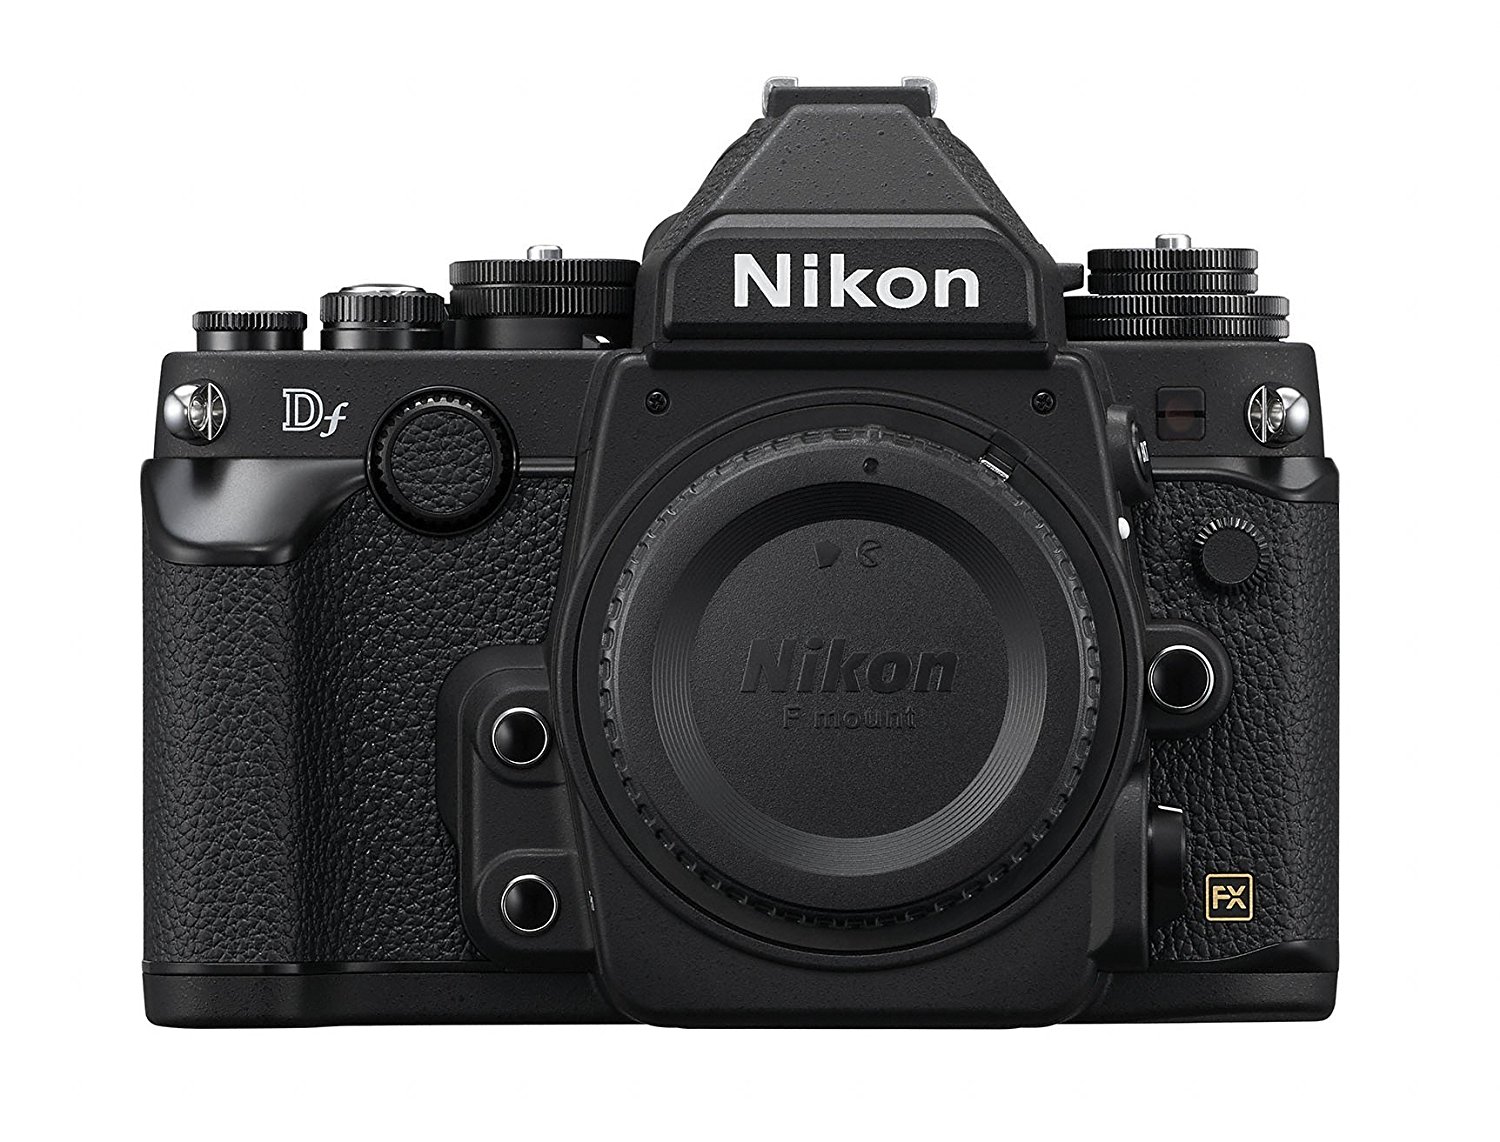 Nikon Df, street photography, street photography cameras, best street photography cameras